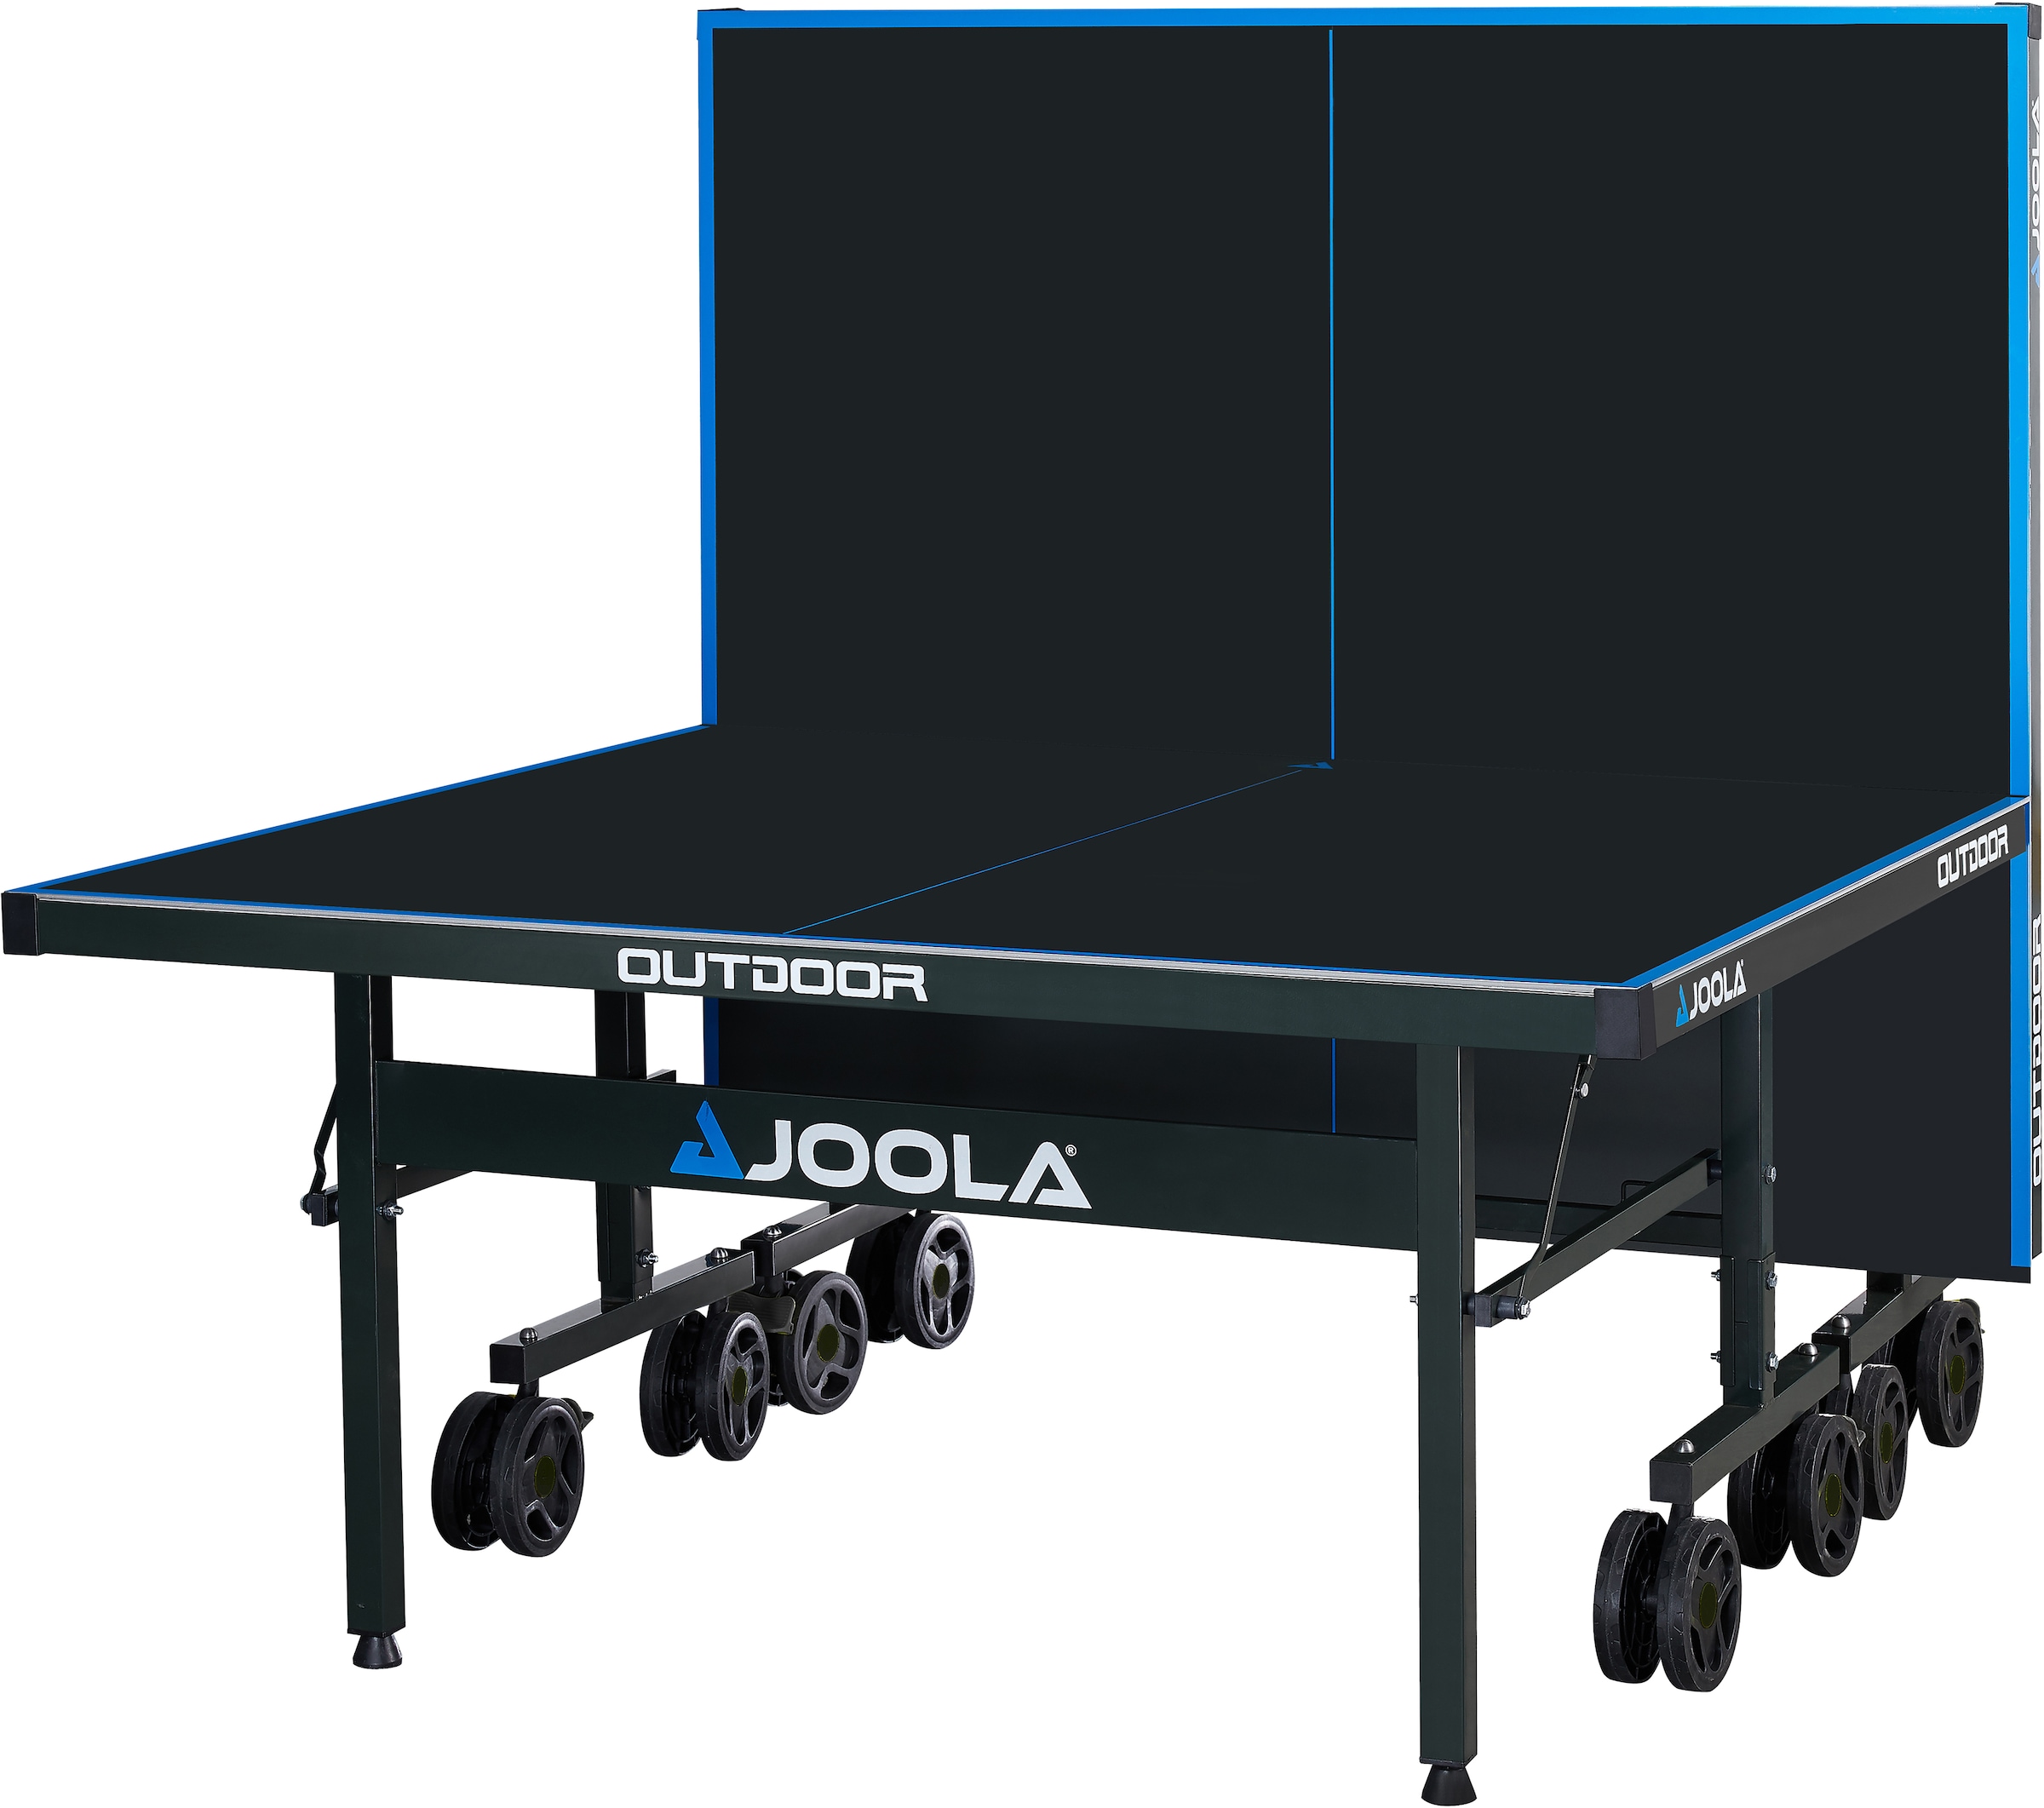 Joola Tischtennisplatte »OUTDOOR J500A«